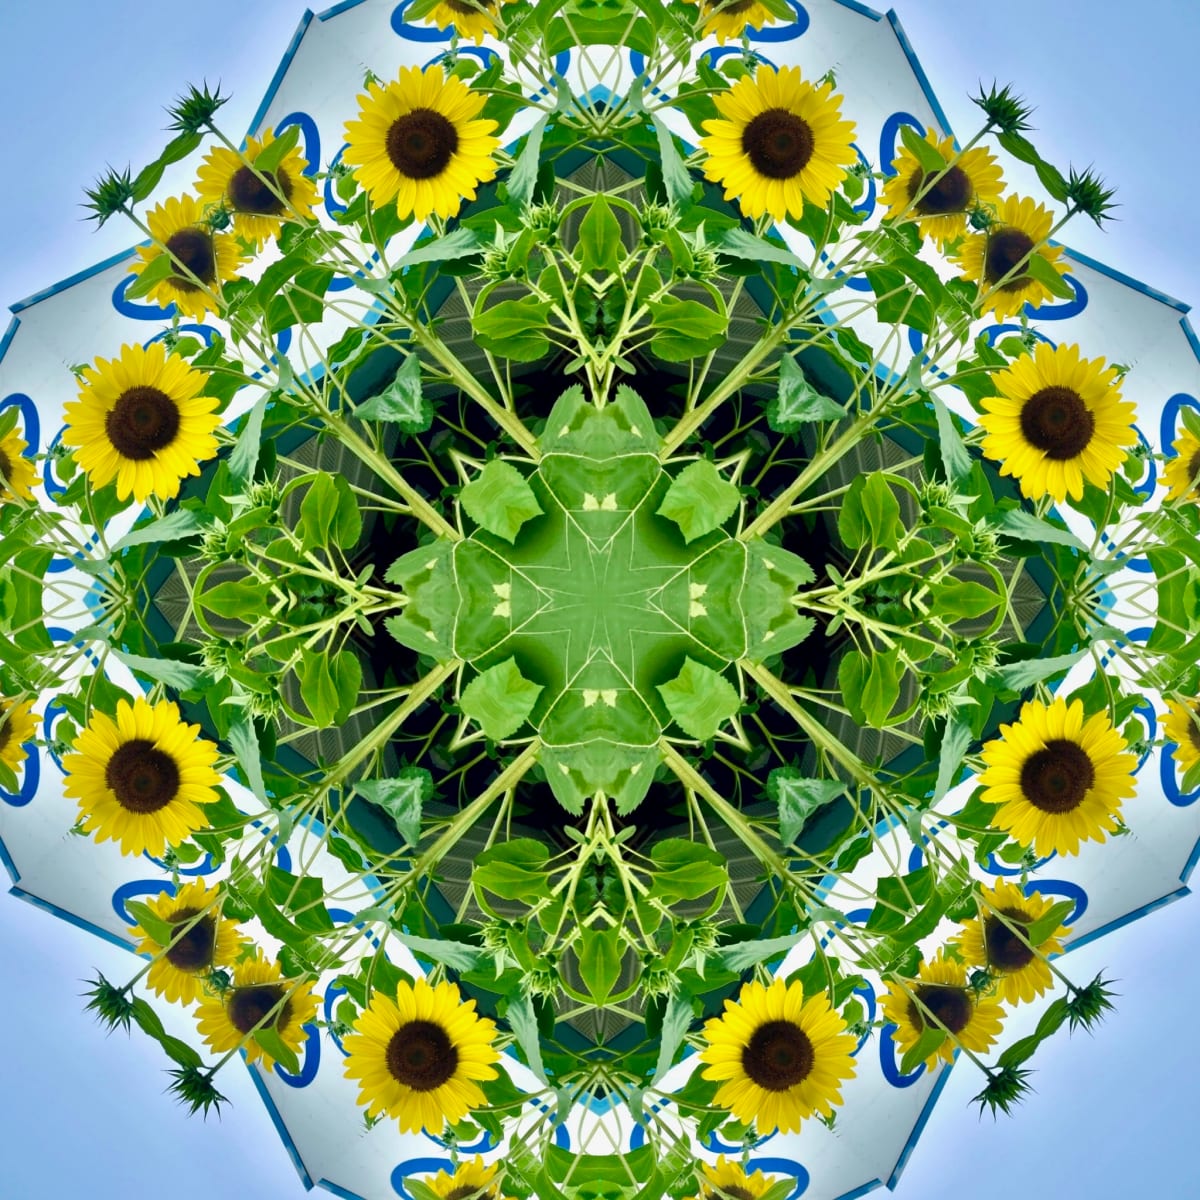 Samantha’s Sunflowers by Denise Wamaling 